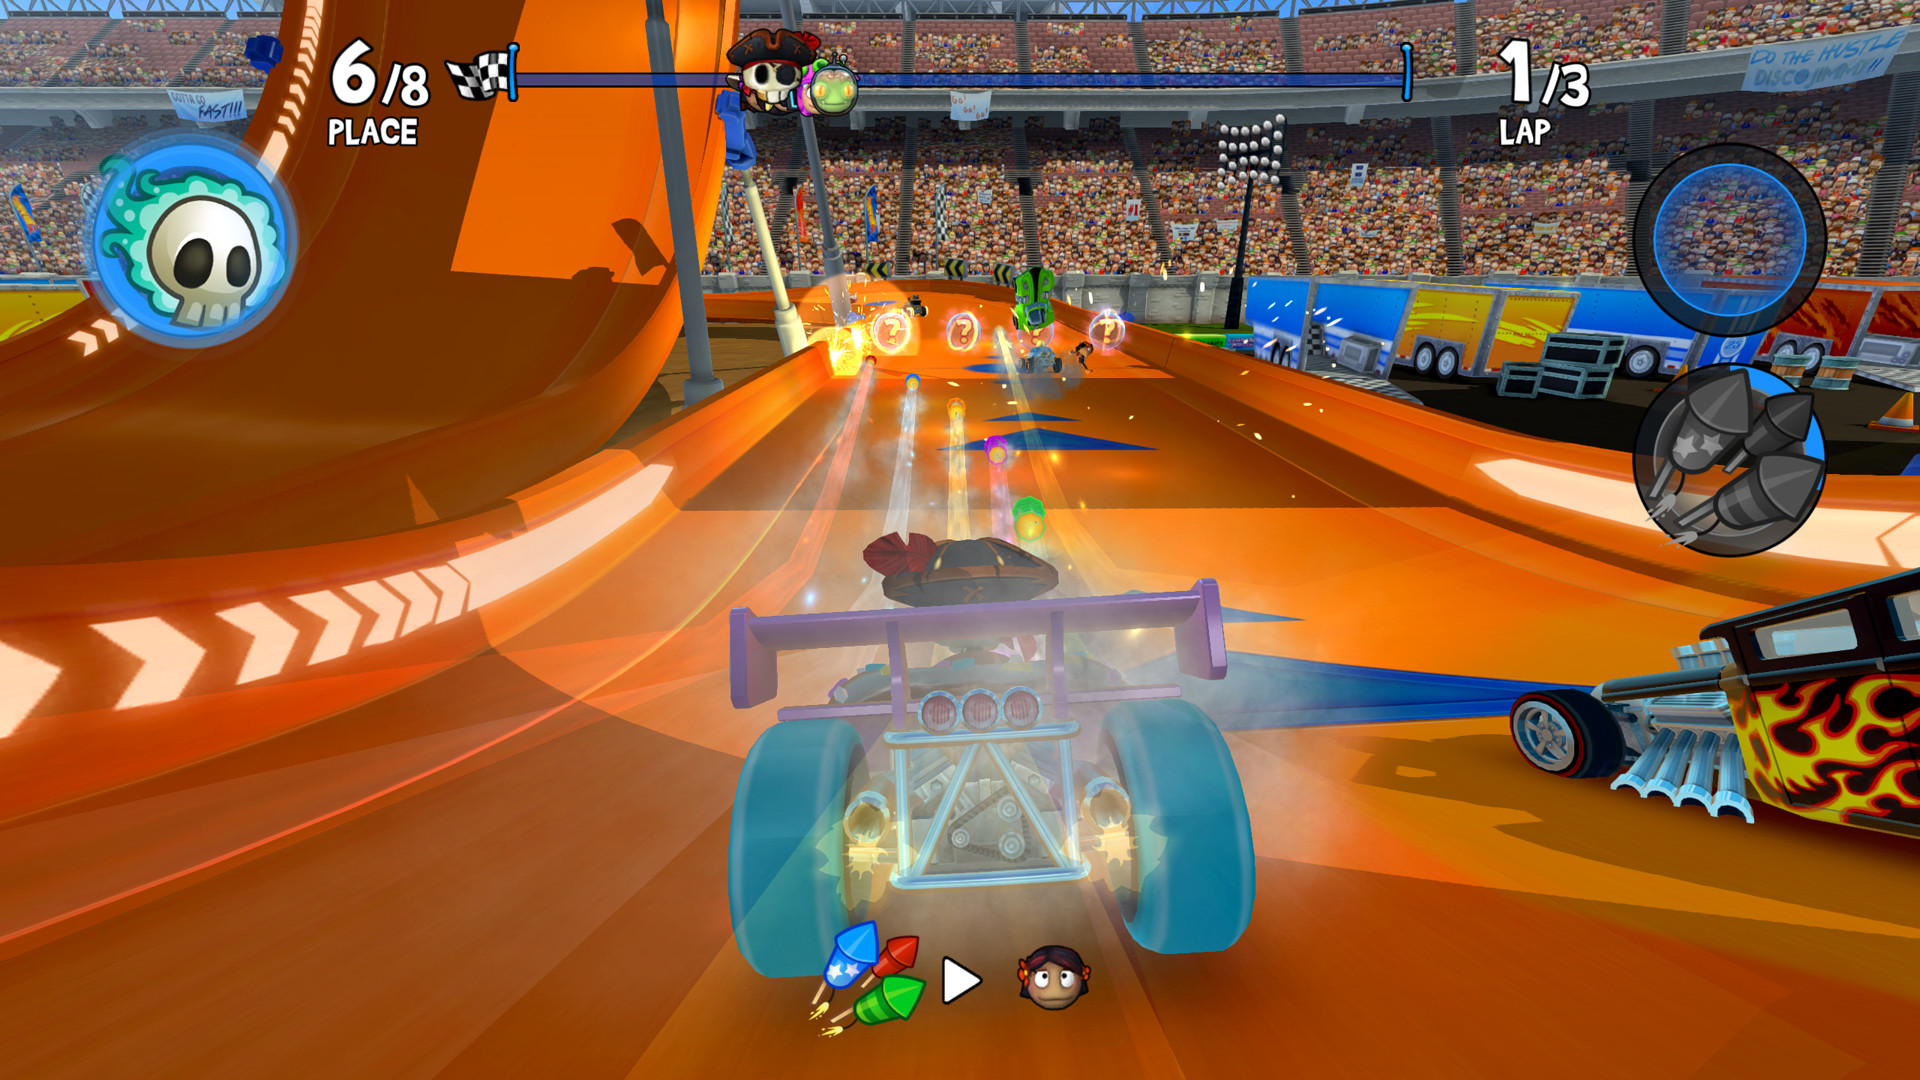 Luna: Beach Buggy Racing 2: Hot Wheels™ Edition